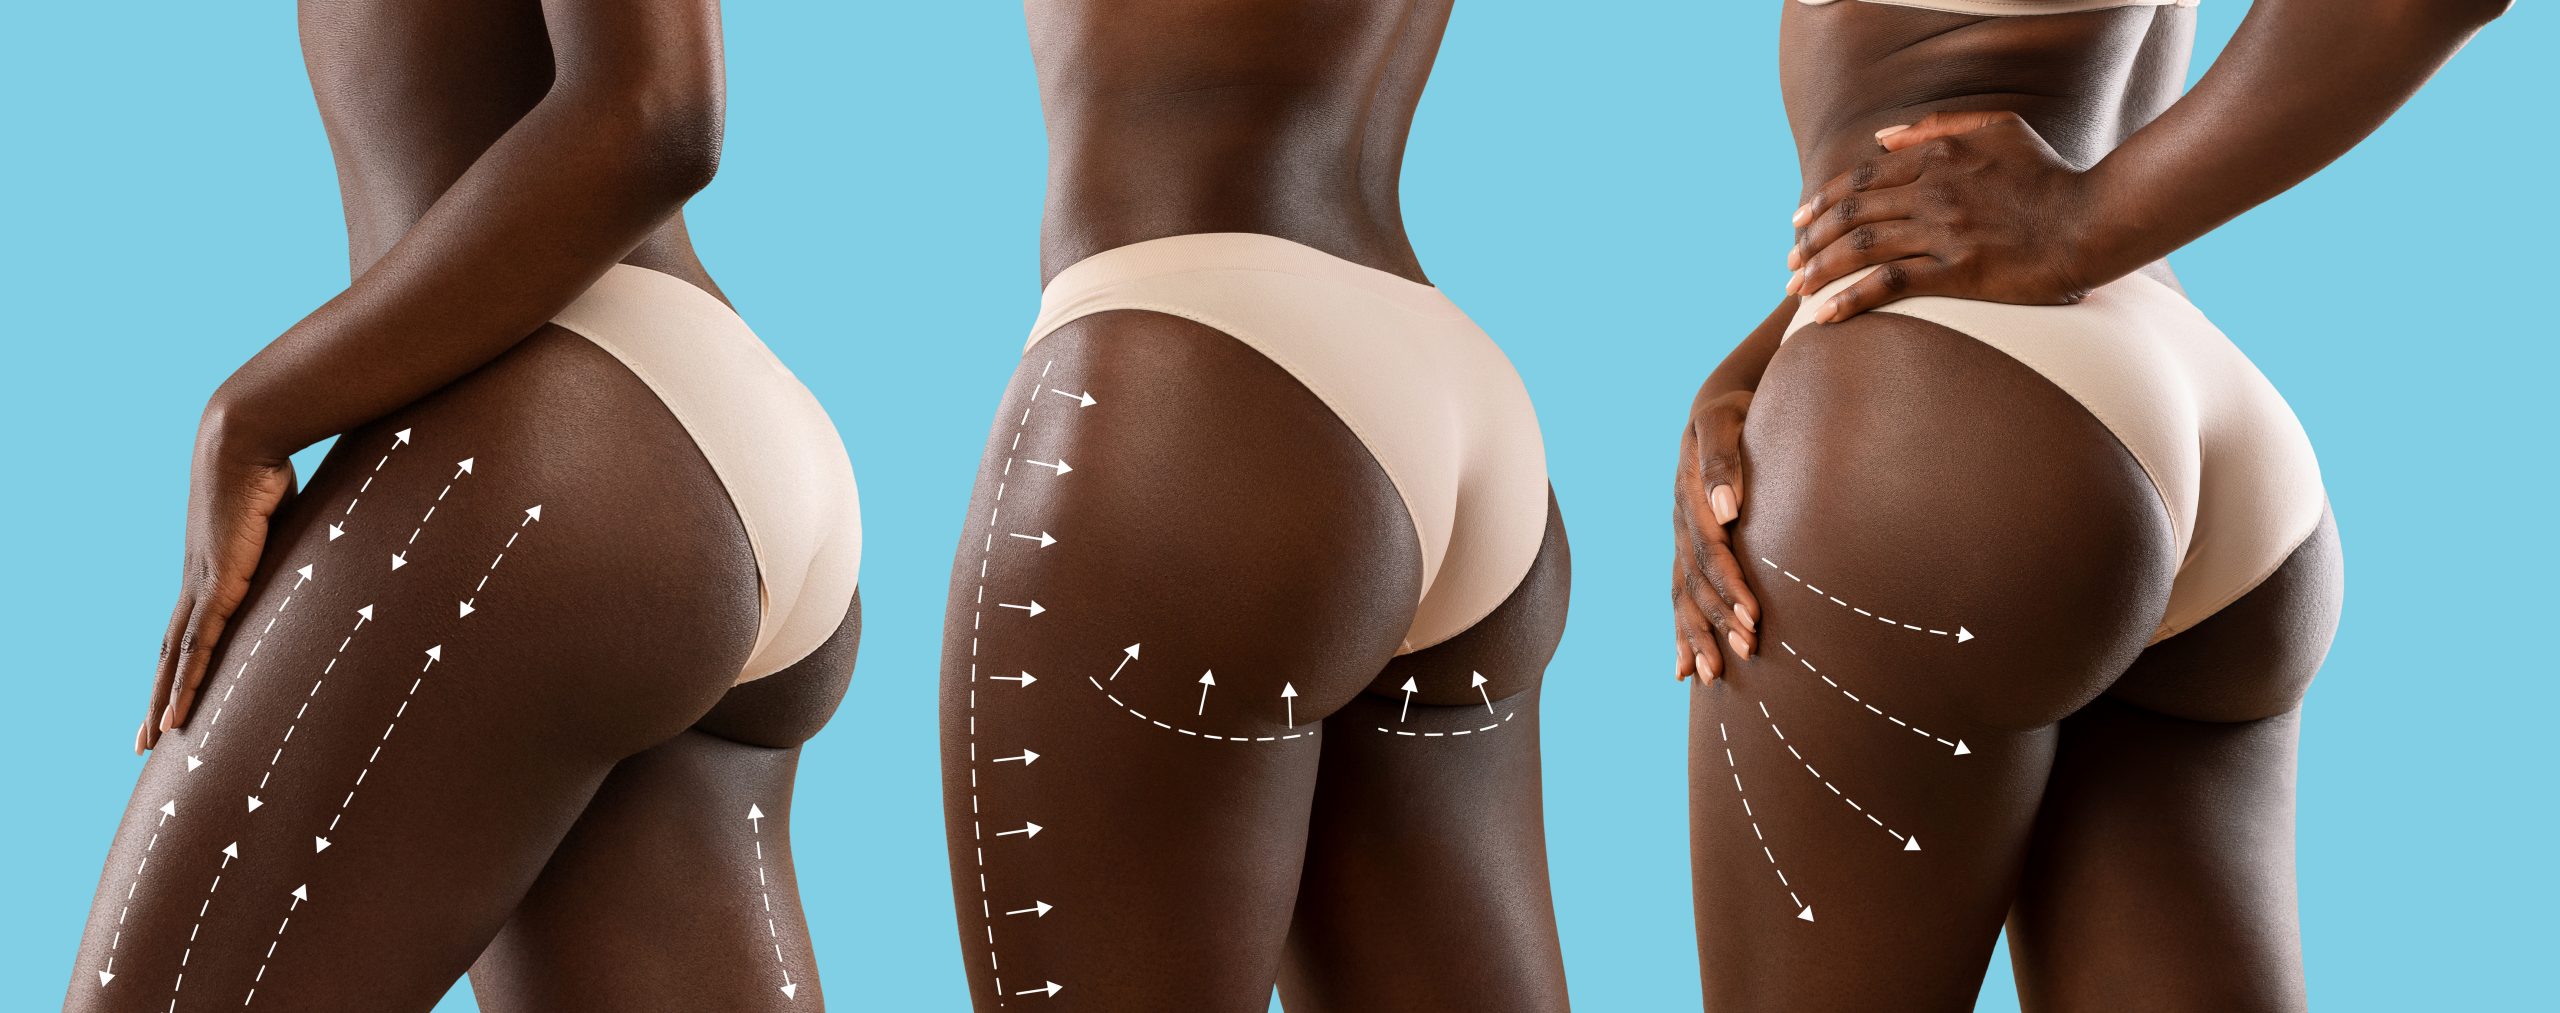 Post Surgical Compression Garments - Brazilian Butt Lift